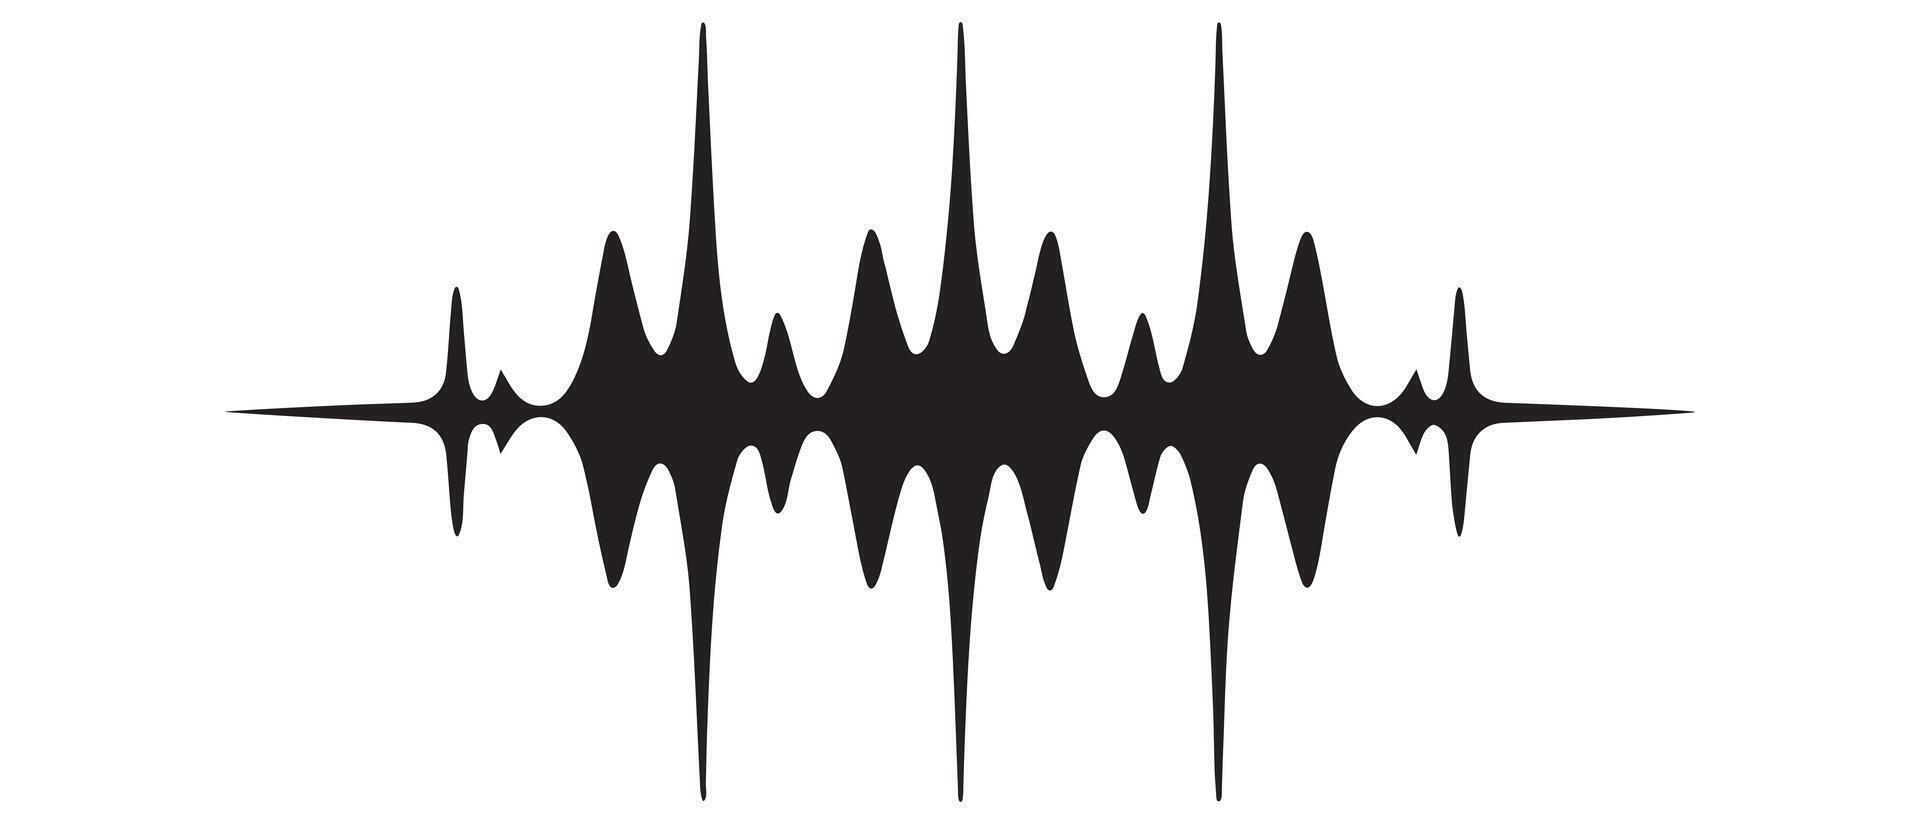 Sound wave line shape icon vector design.